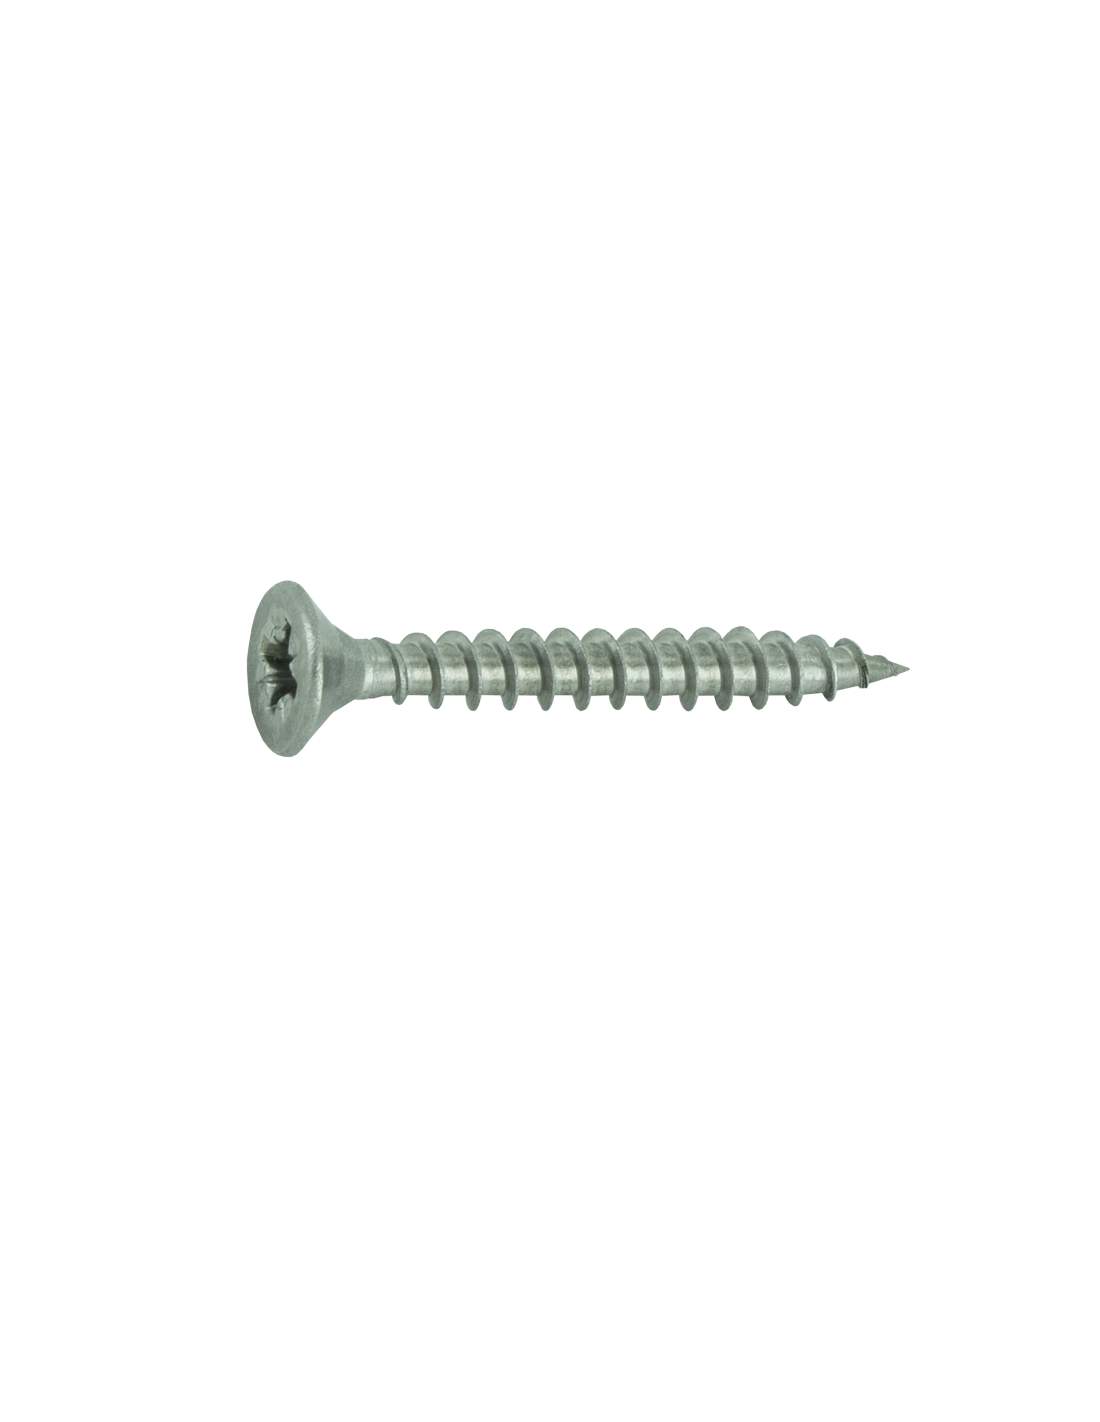 Stainless steel Pozidriv countersunk head screws A2 5x50, 10 pcs.